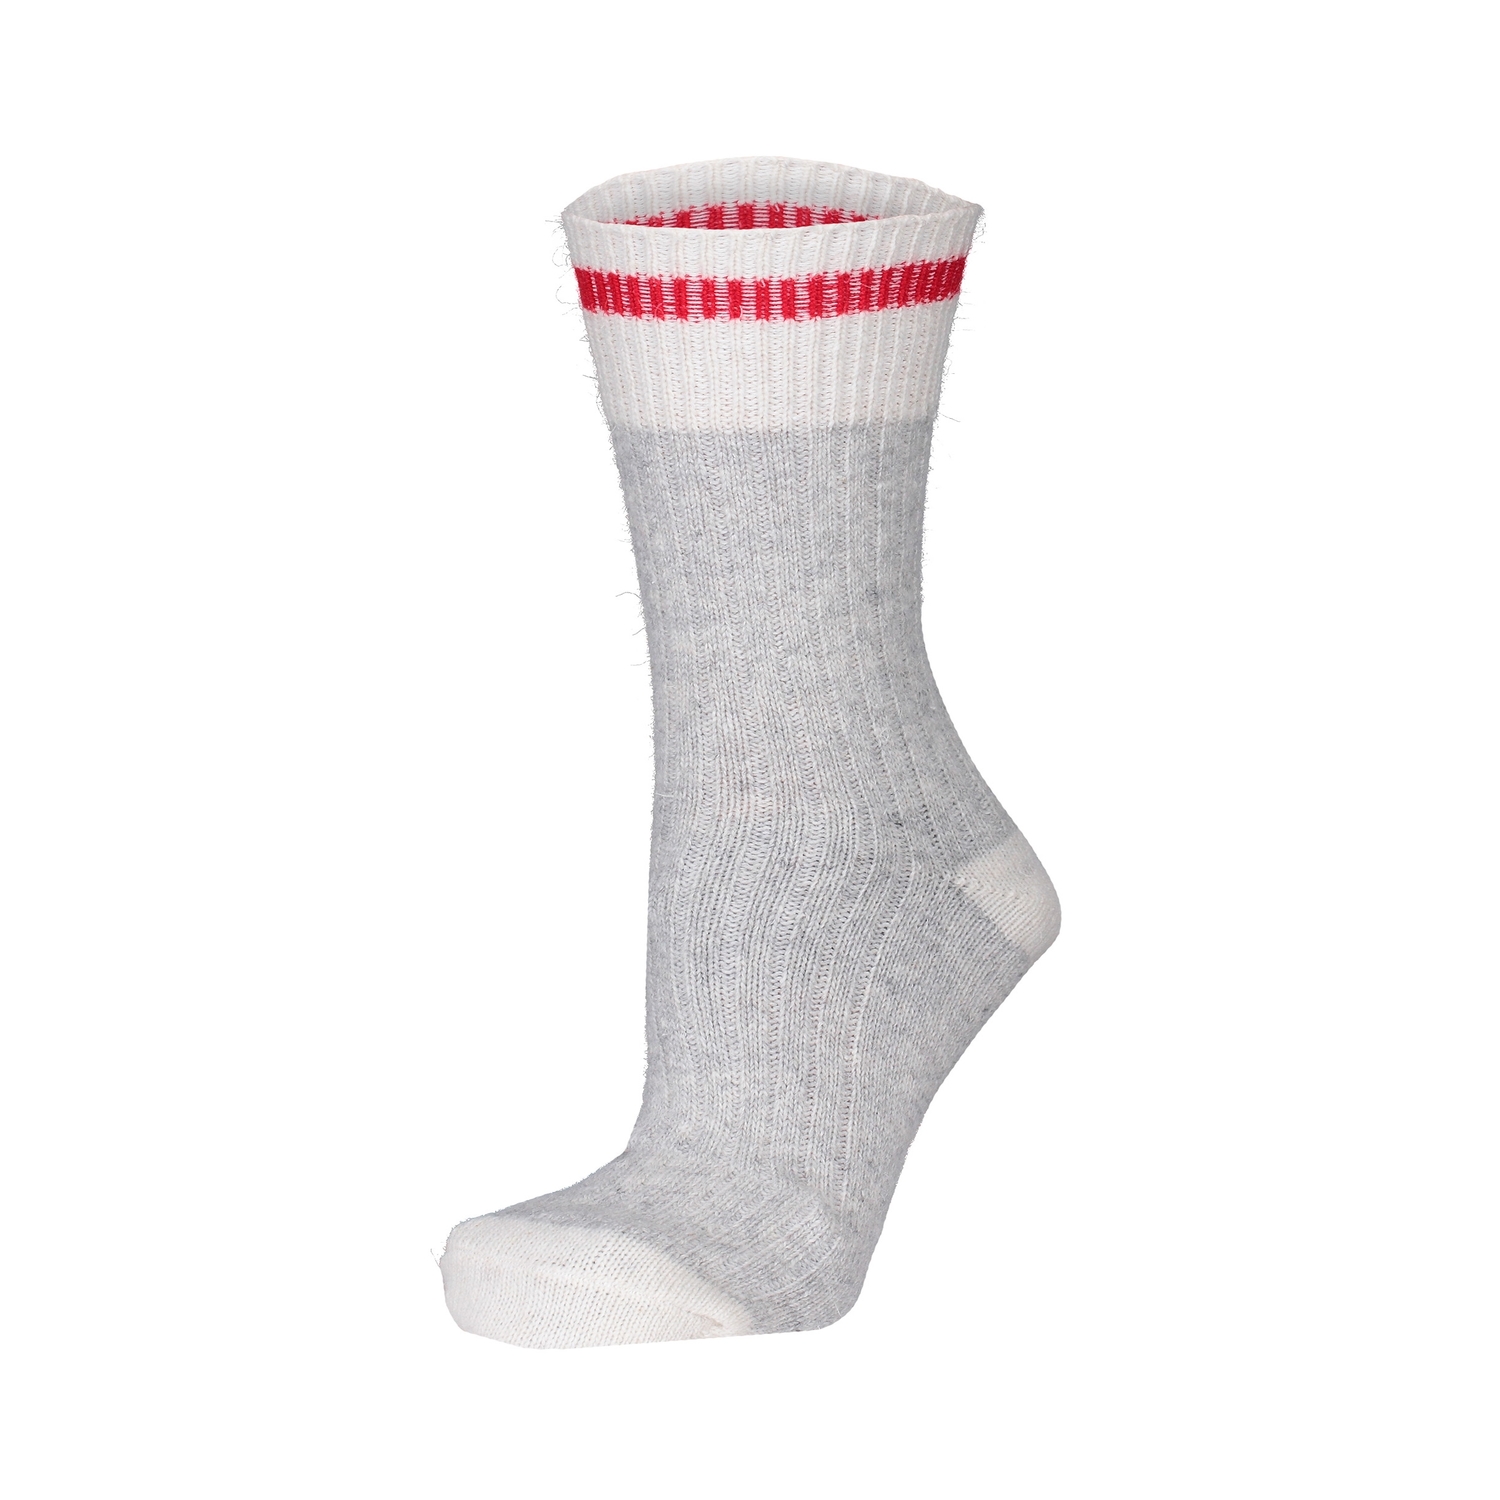 Socks-52%poly30%acry17%wool3%span-pairs (3)